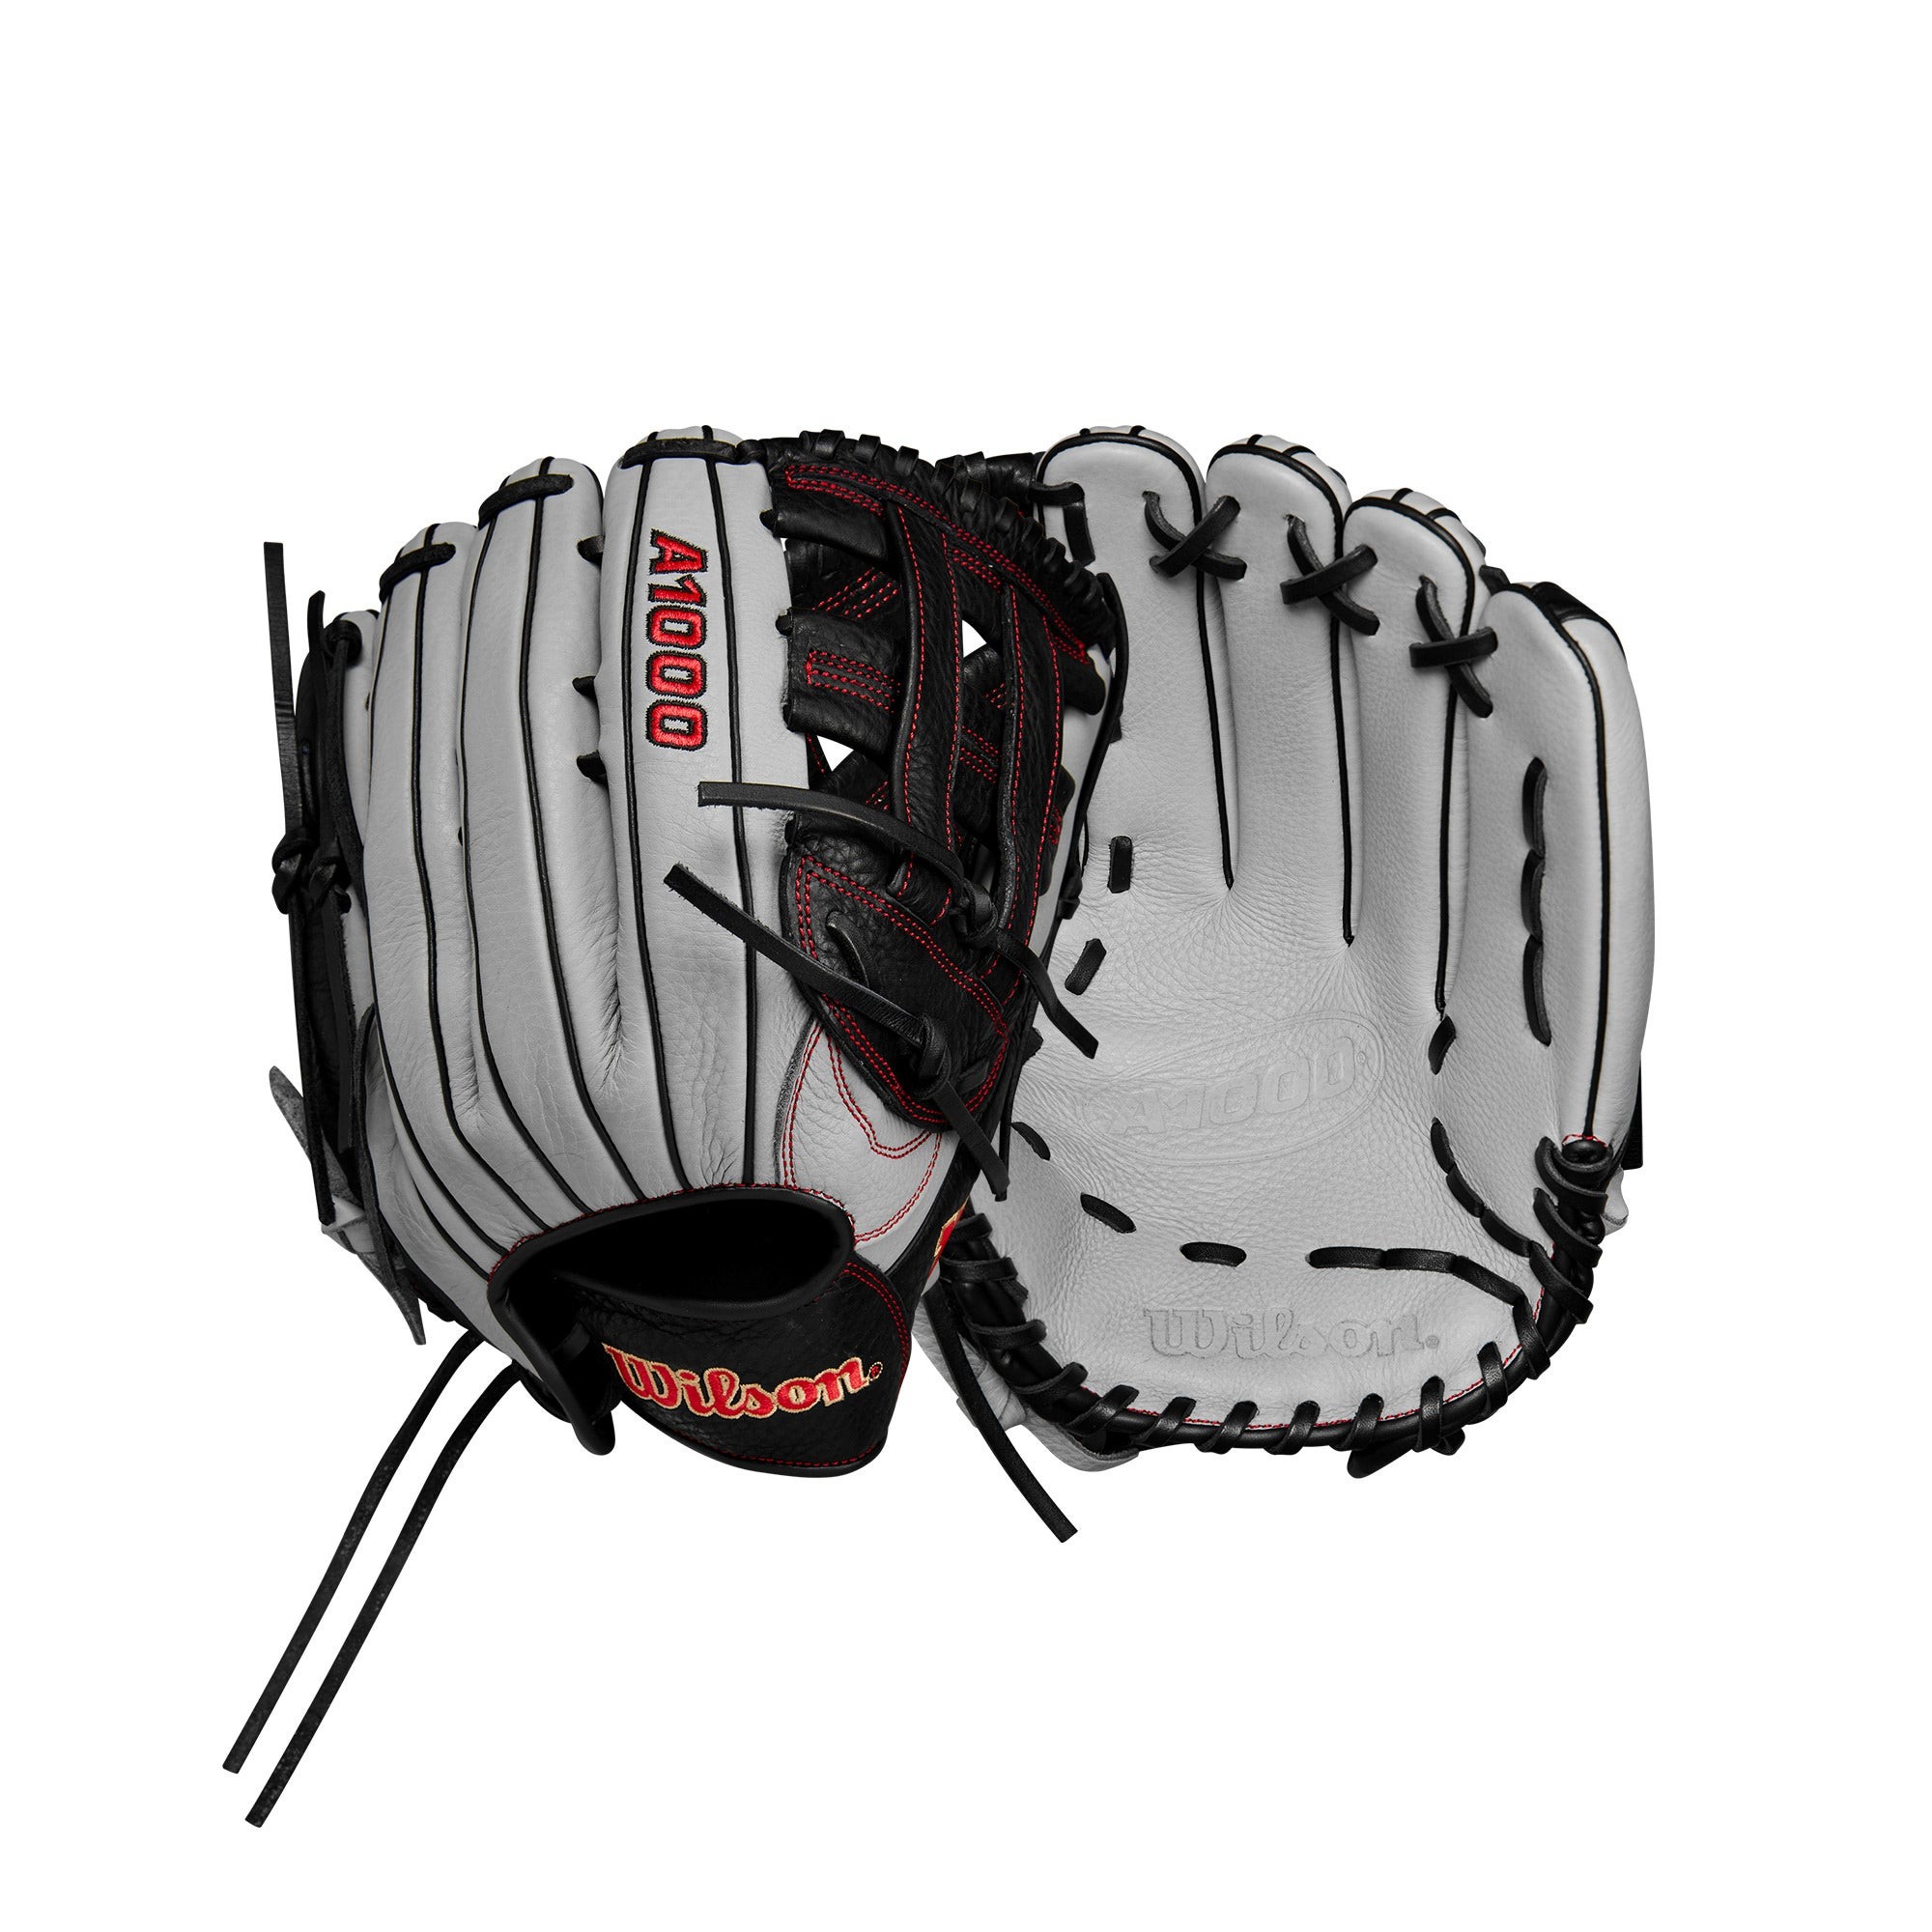 A1000 1750 12.5" Outfield Baseball Glove - Left Hand Thrower